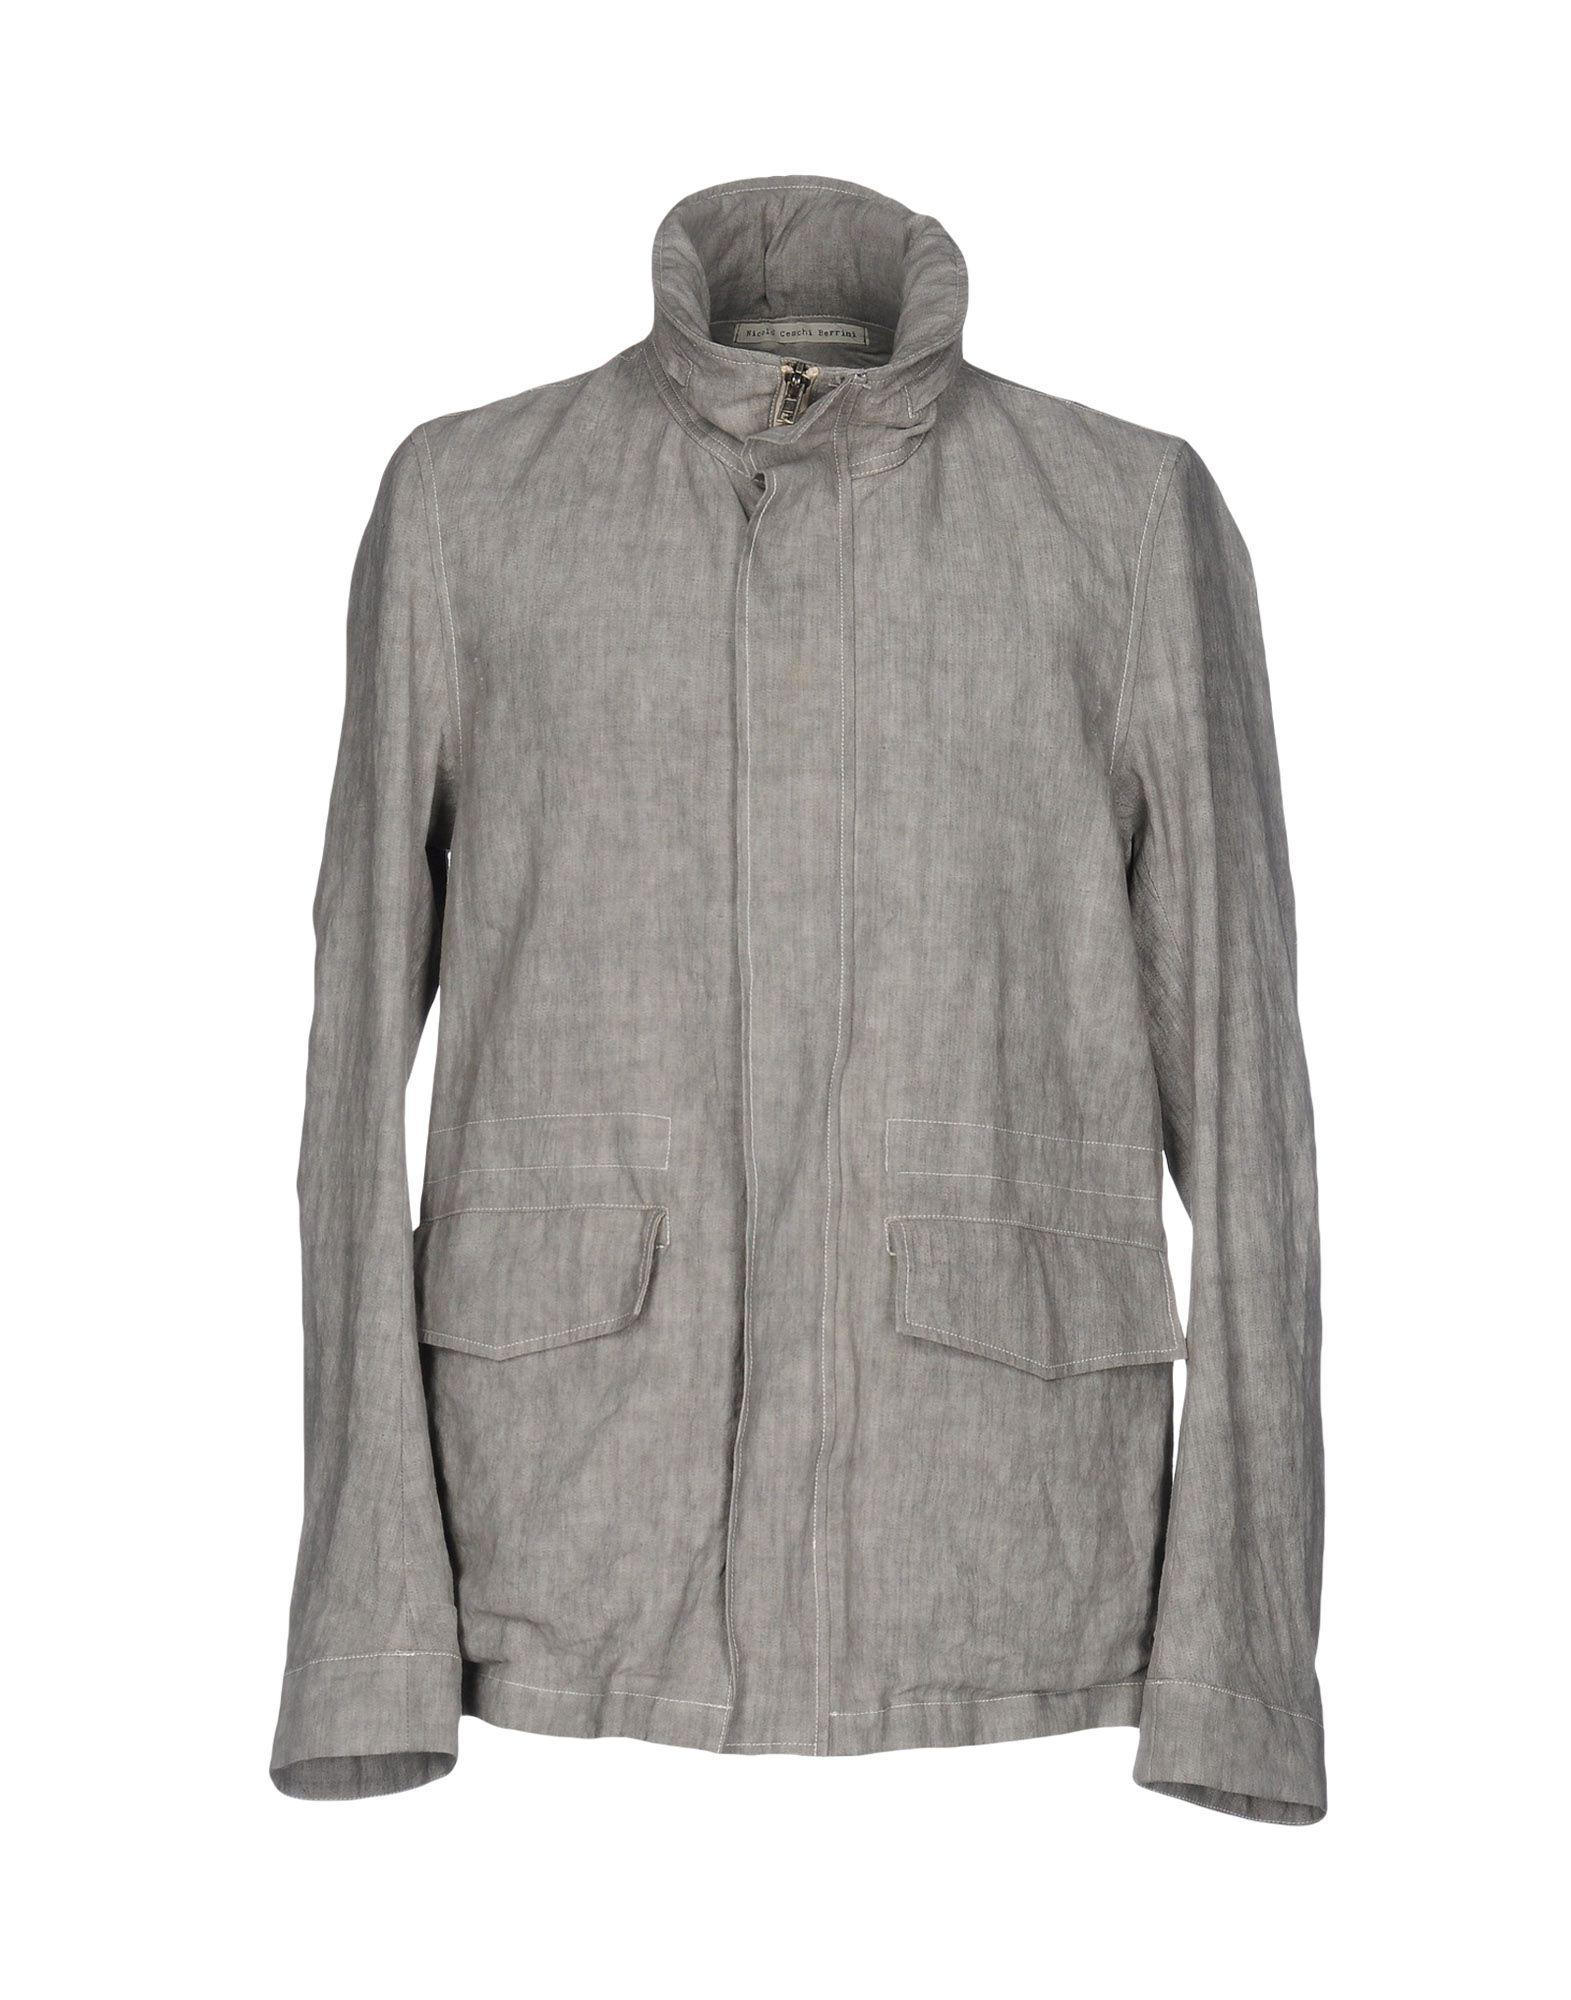 Lyst - Nicolo' ceschi berrini Jacket in Gray for Men